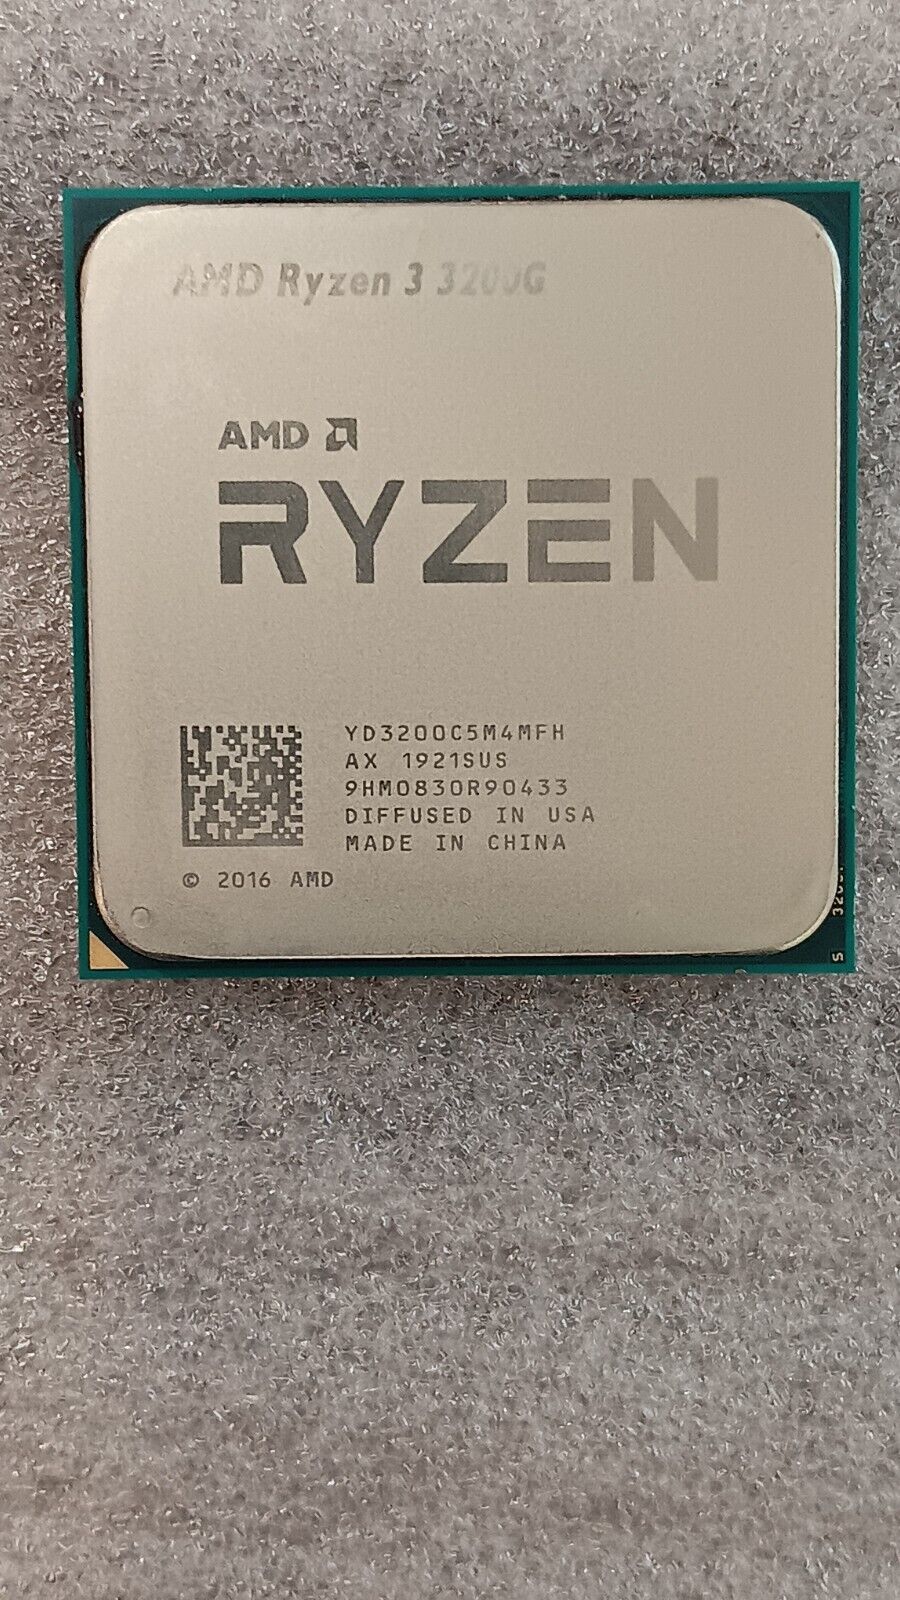 AMD Ryzen 3 3200G (YD3200C5M4MFH) 3.6GHz 4 Core AM4 PC CPU